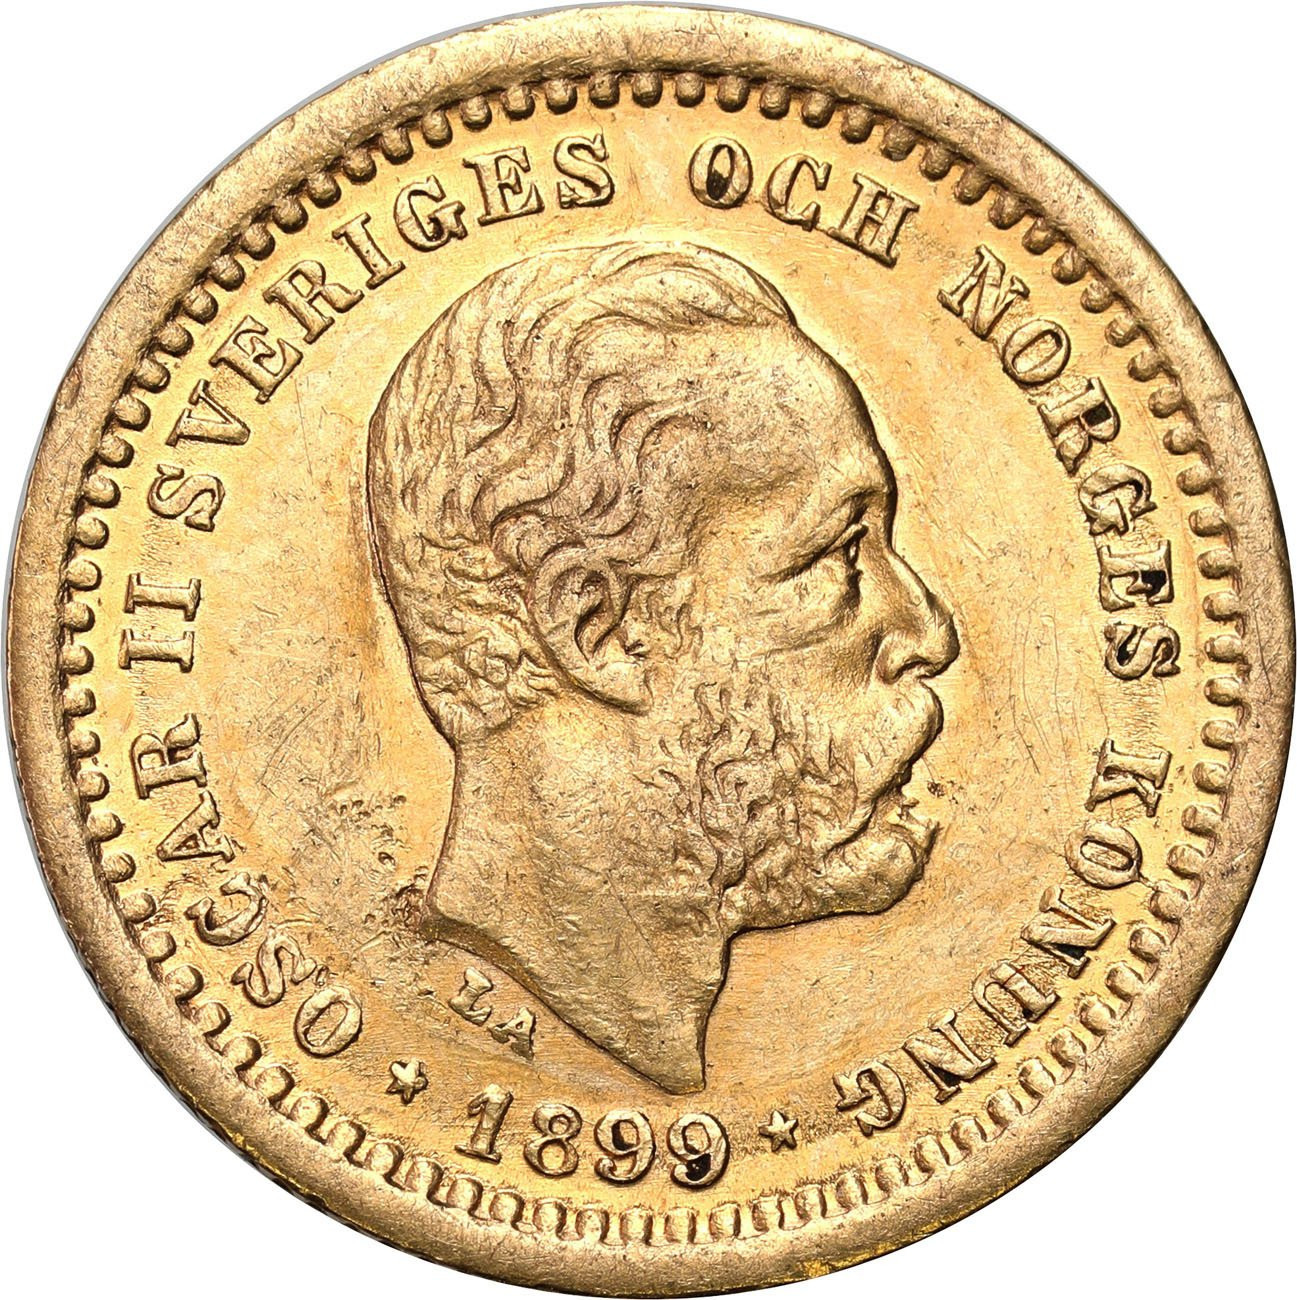 Szwecja Oskar II 5 koron 1899